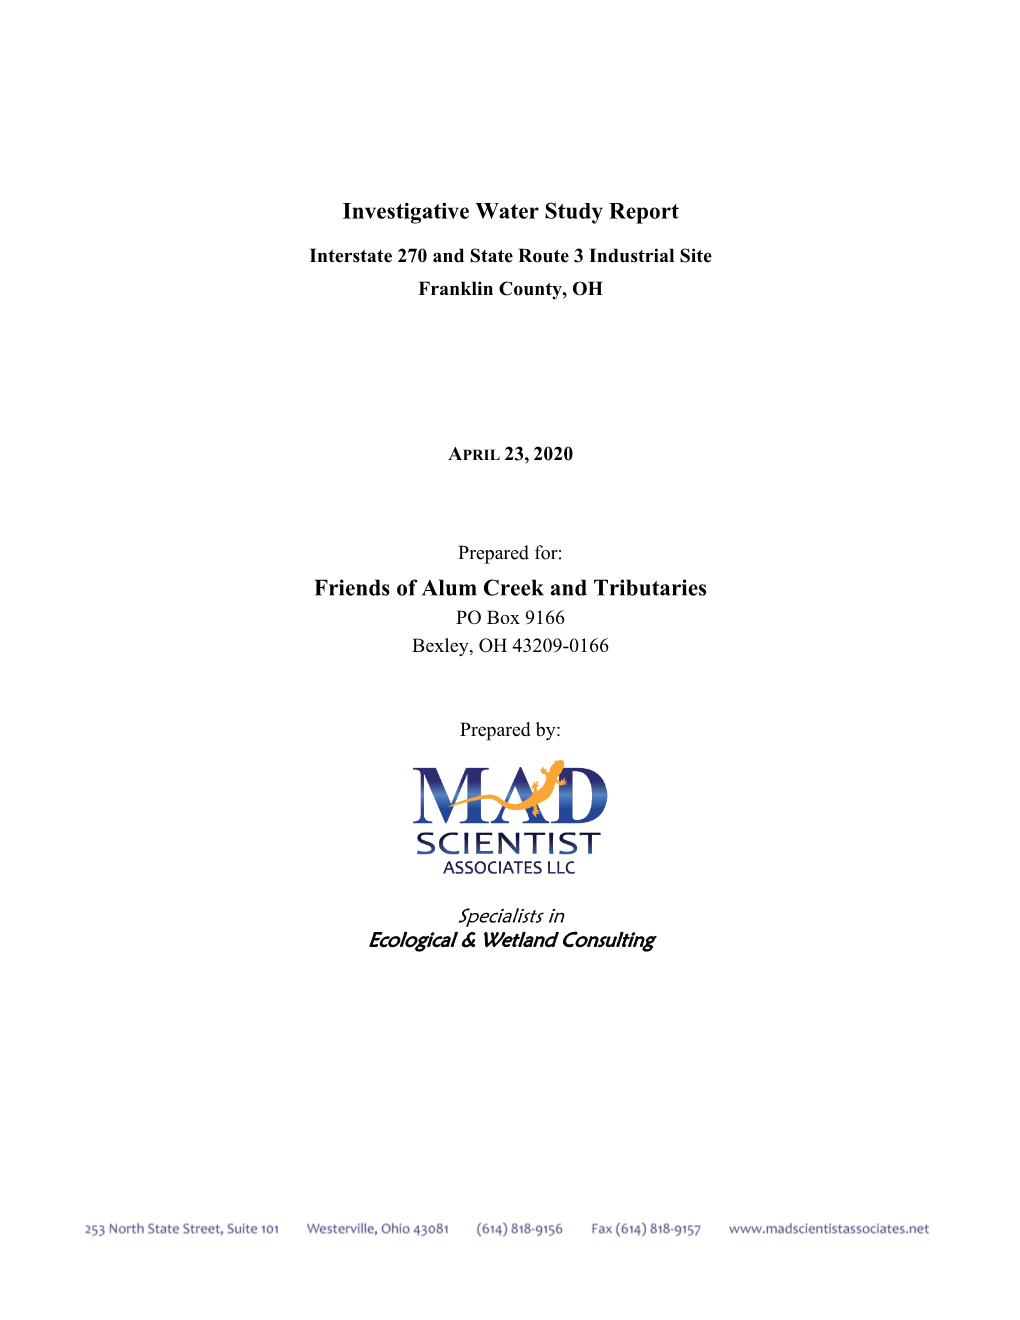 Investigative Water Study Report 2020 (PDF)